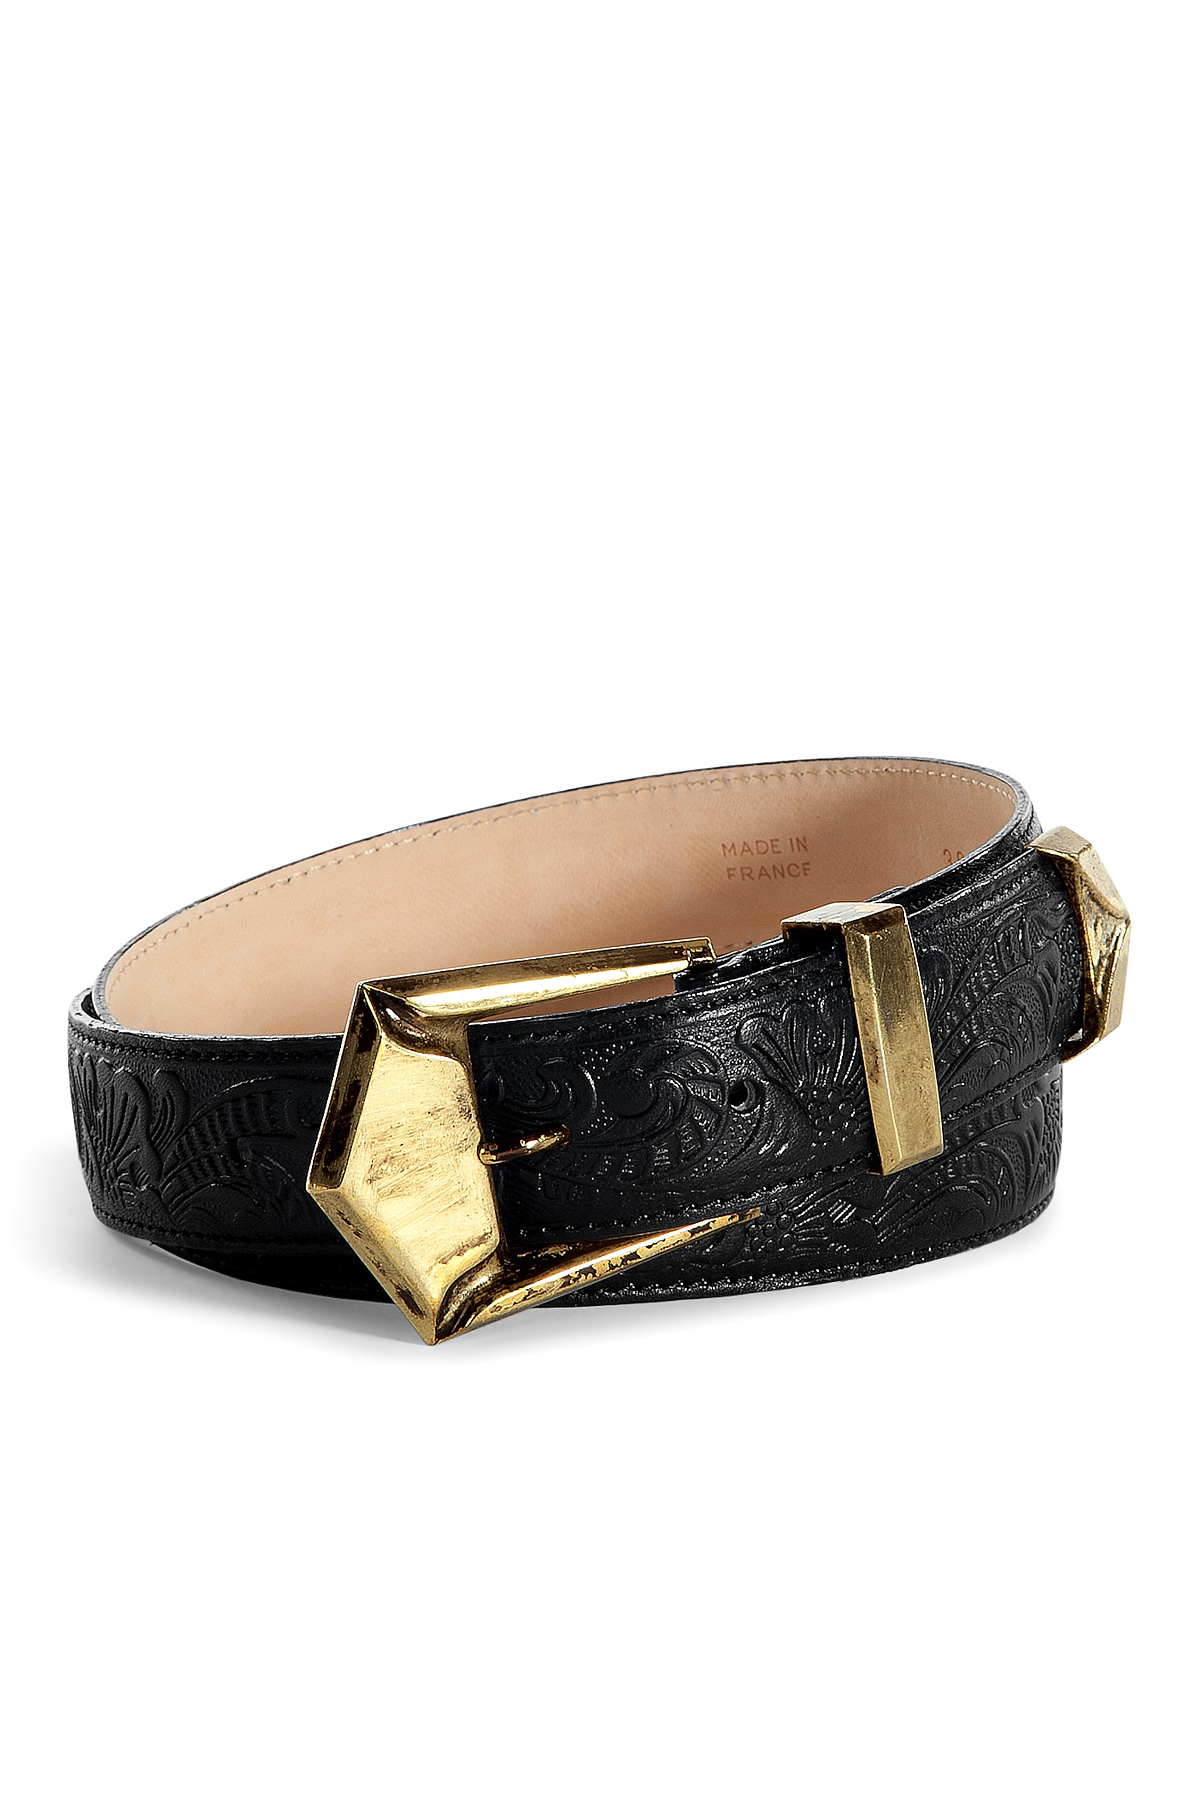 Lyst - Balmain Black Embossed Belt with Gold Buckle in Black